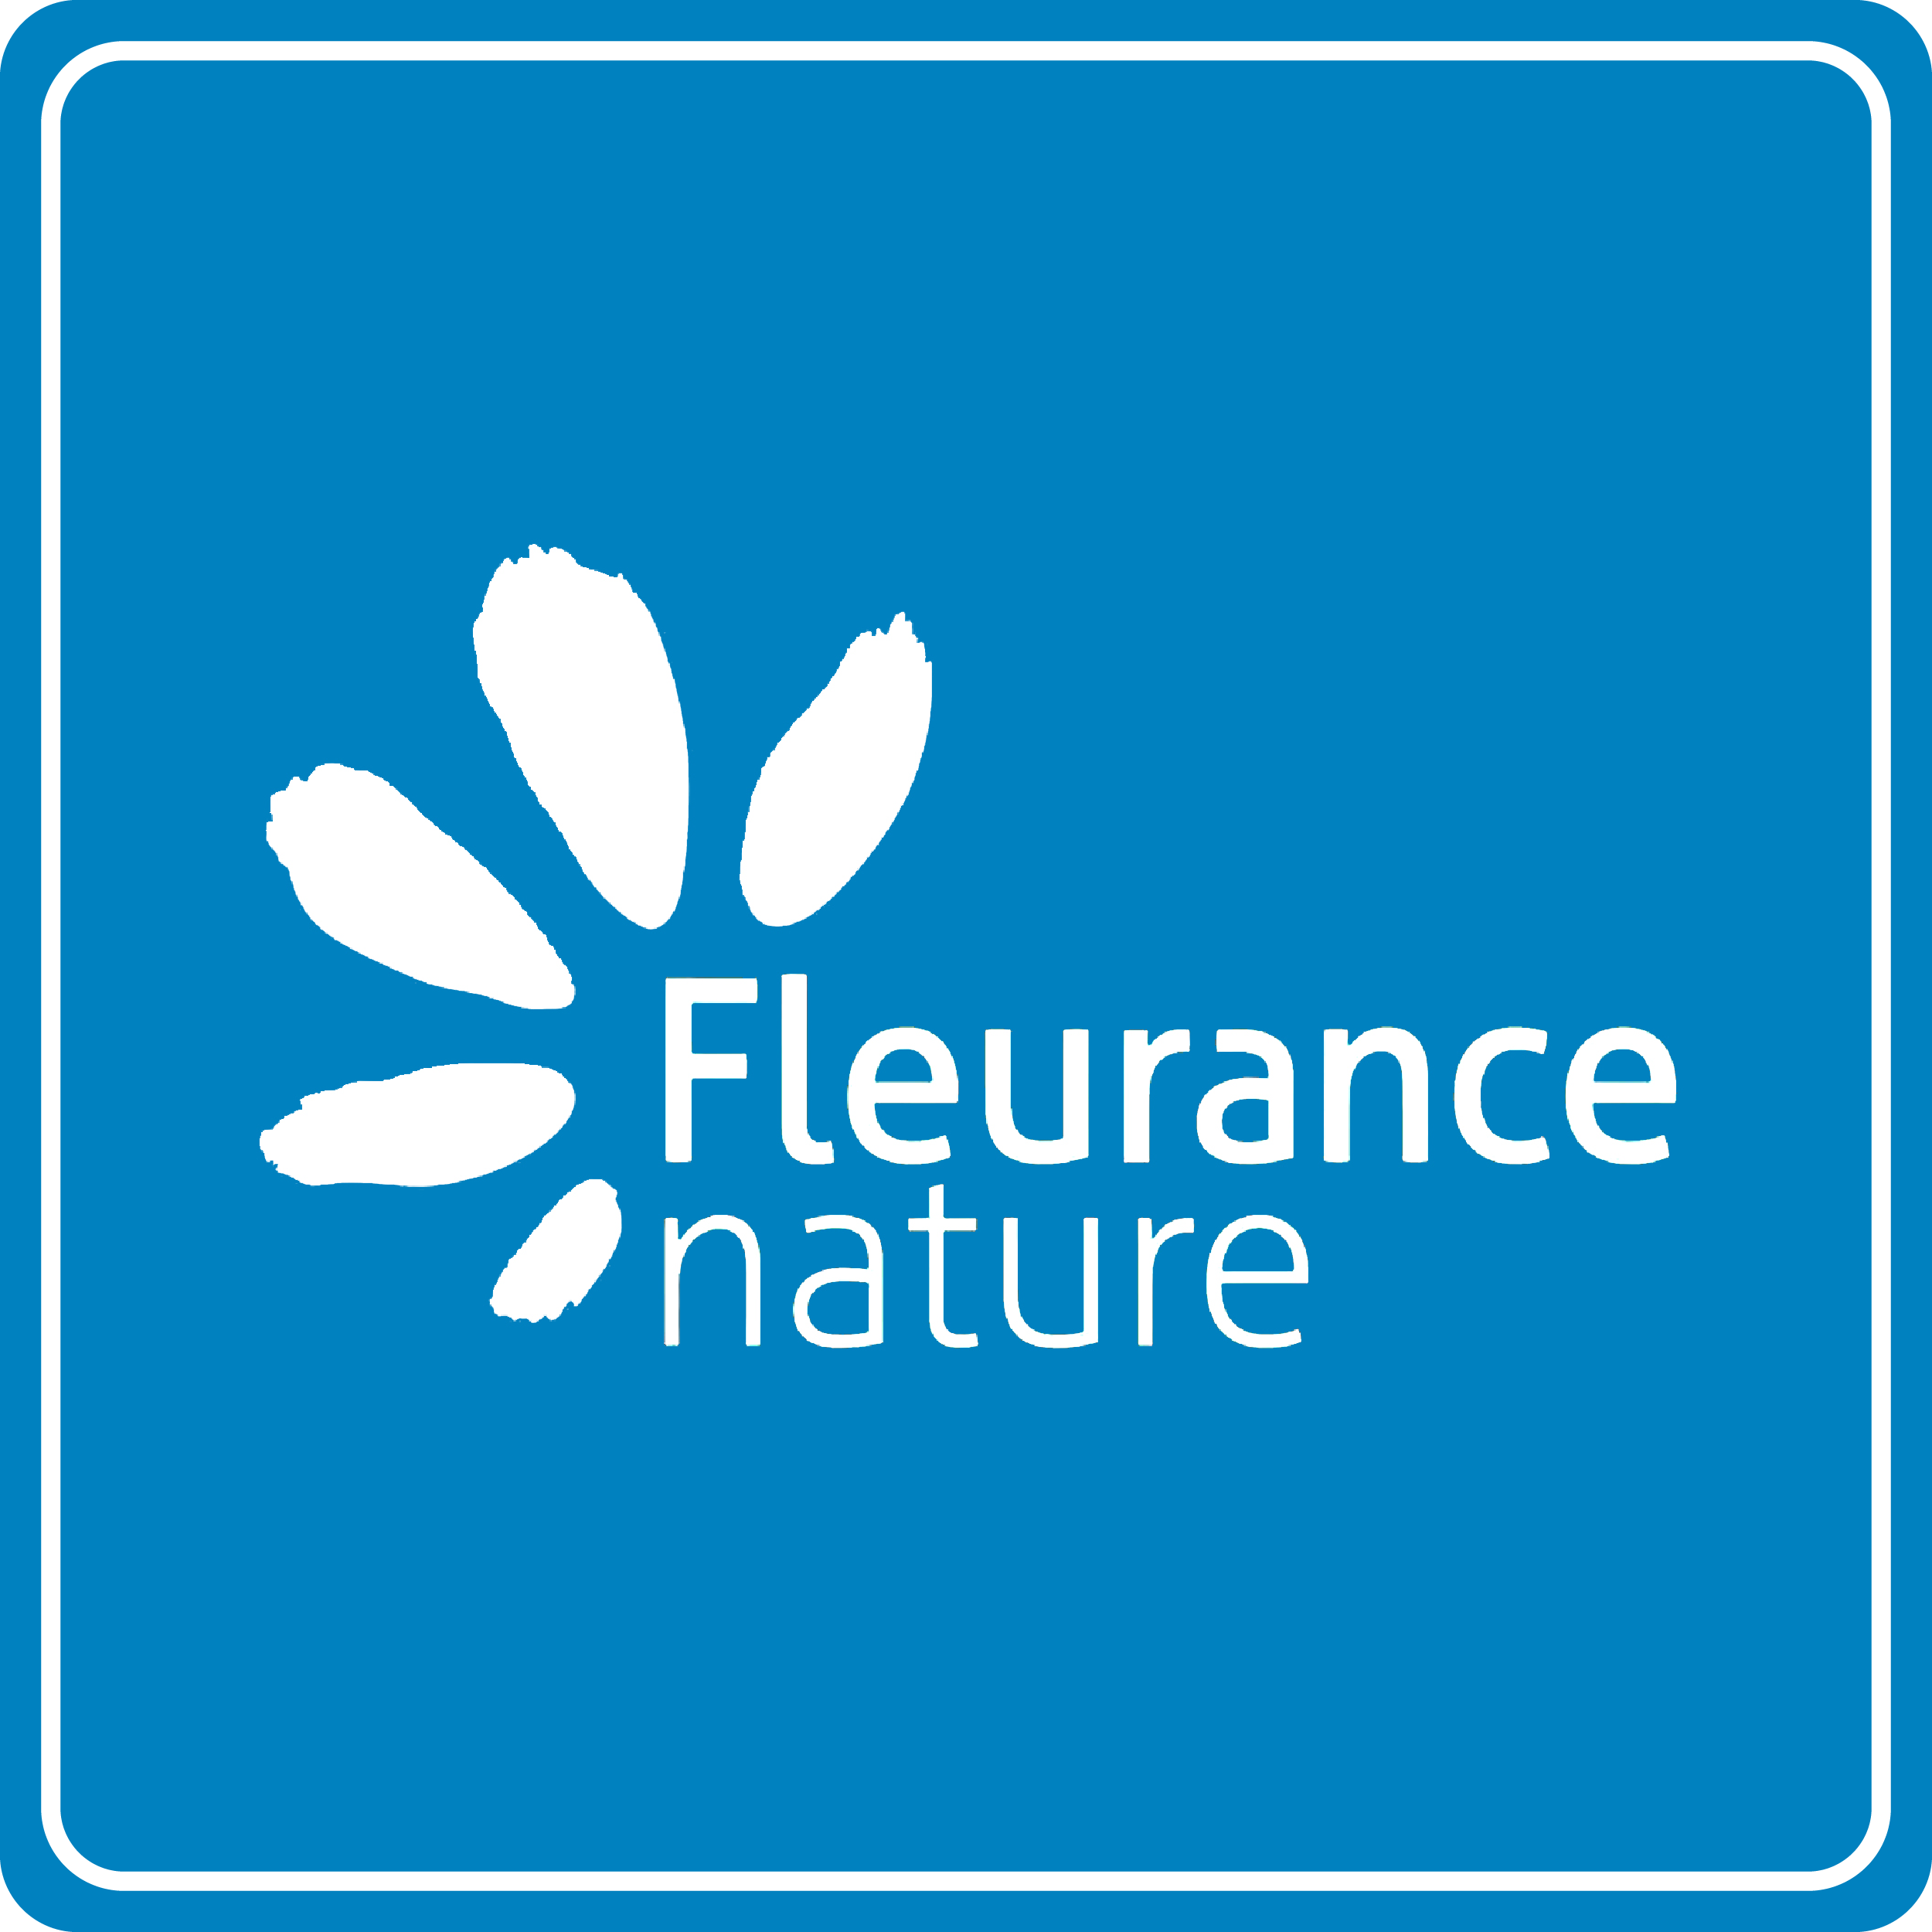 FLEURANCE NATURE